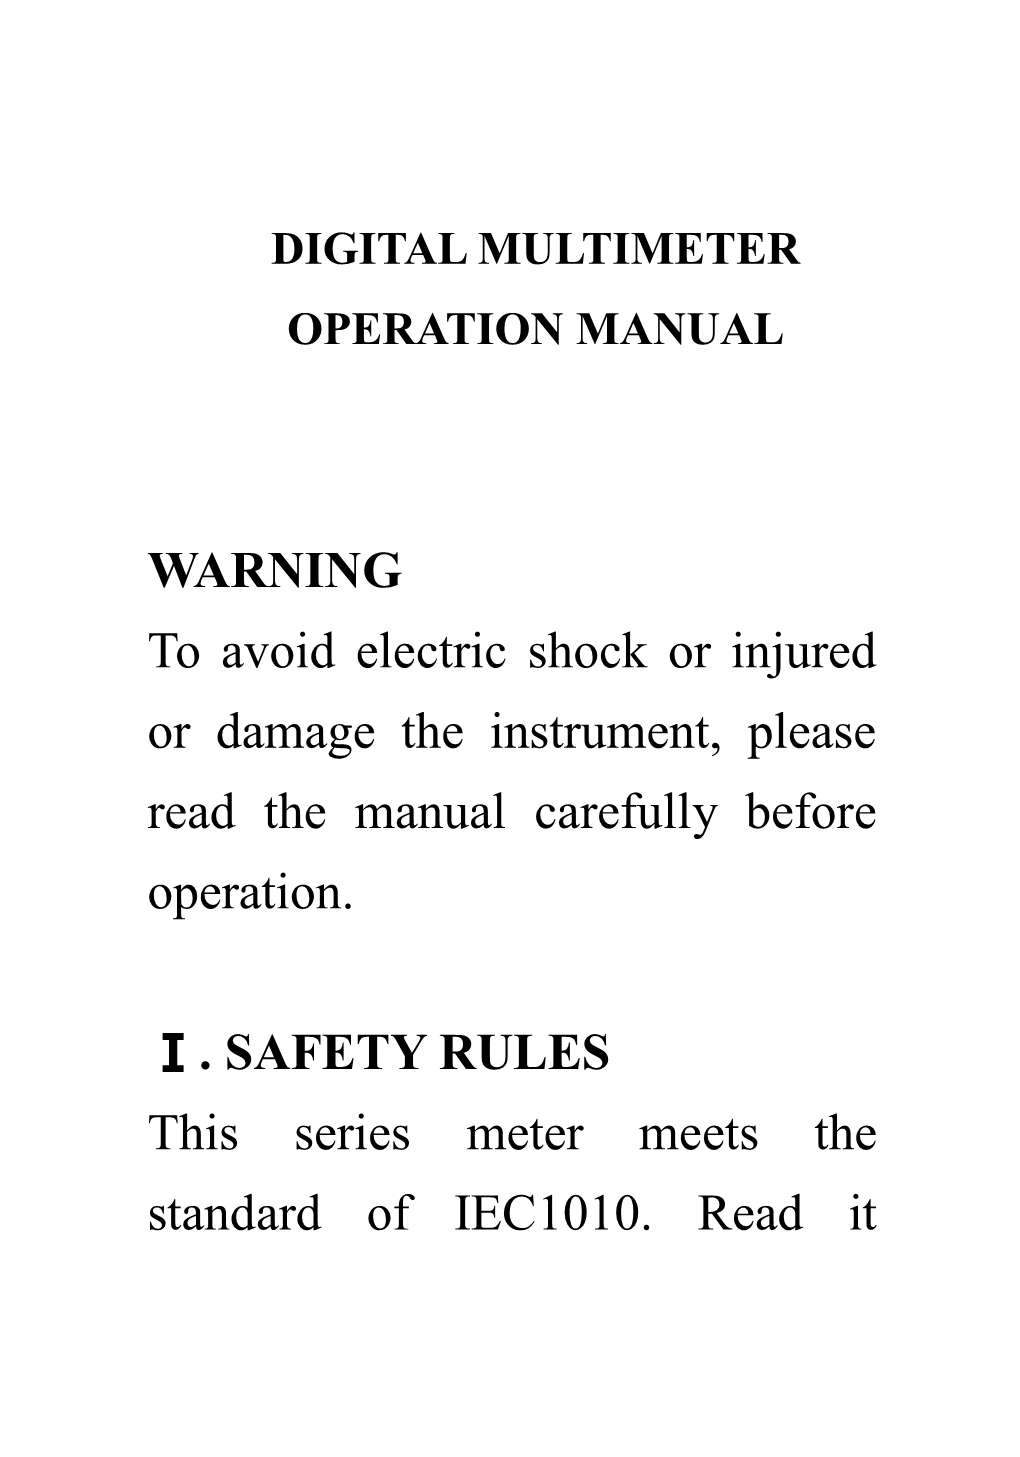 Digital Multimeter s1